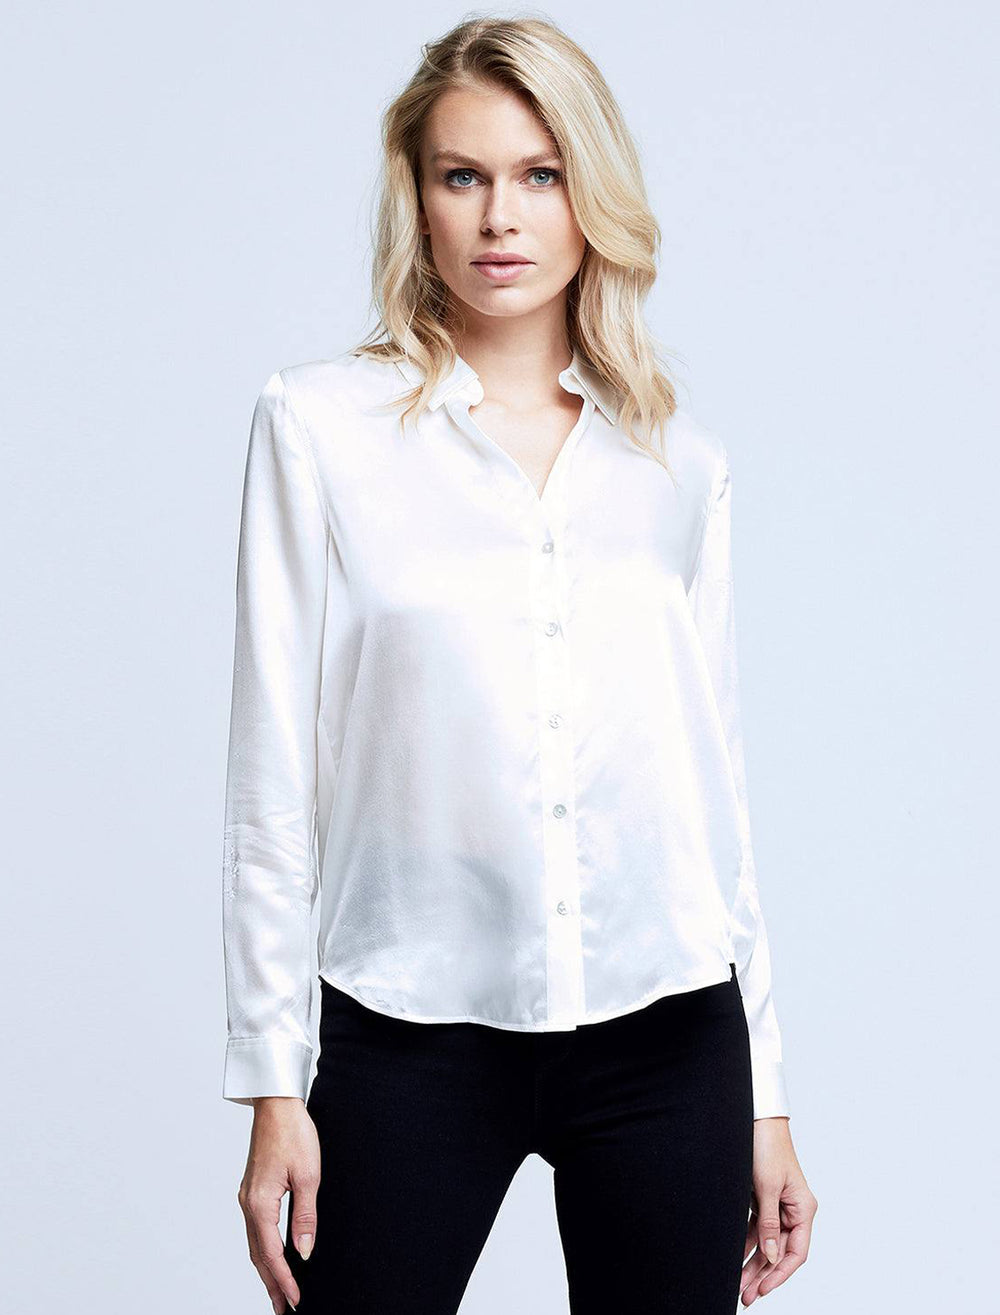 Model wearing L'agence's tyler blouse in ivory.